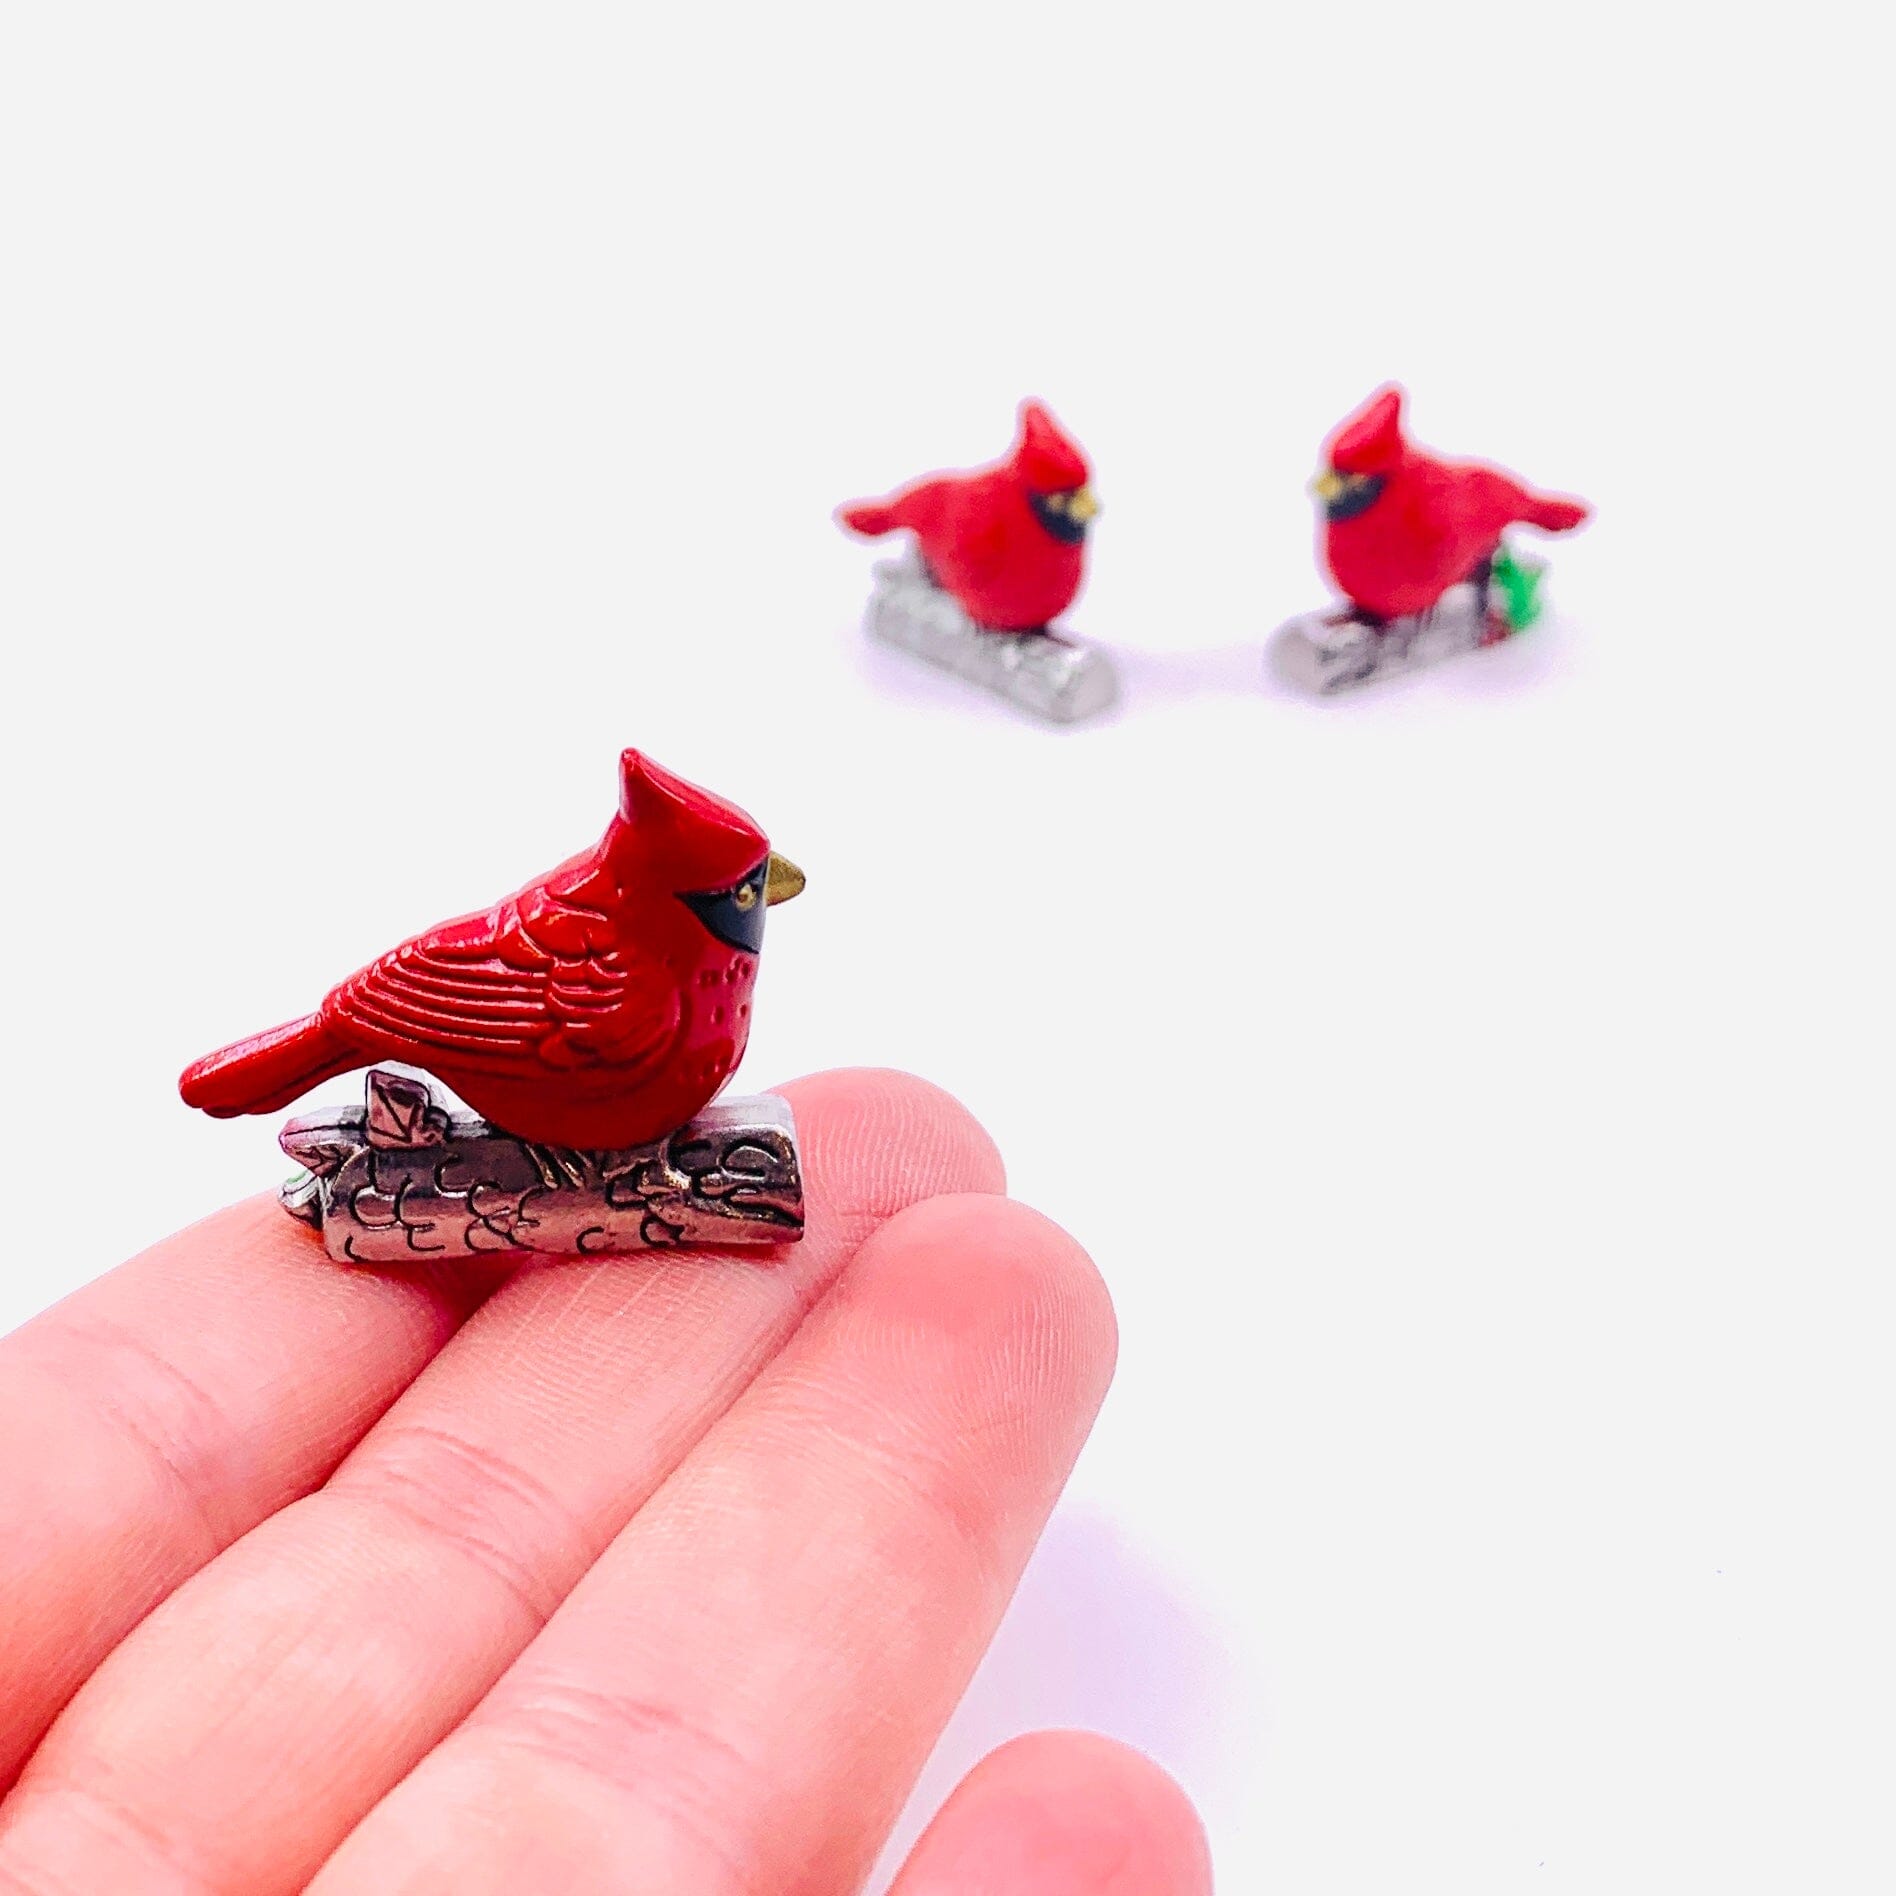 The Christmas Cardinal from Heaven Pocket Charm PT16 Miniature GANZ 